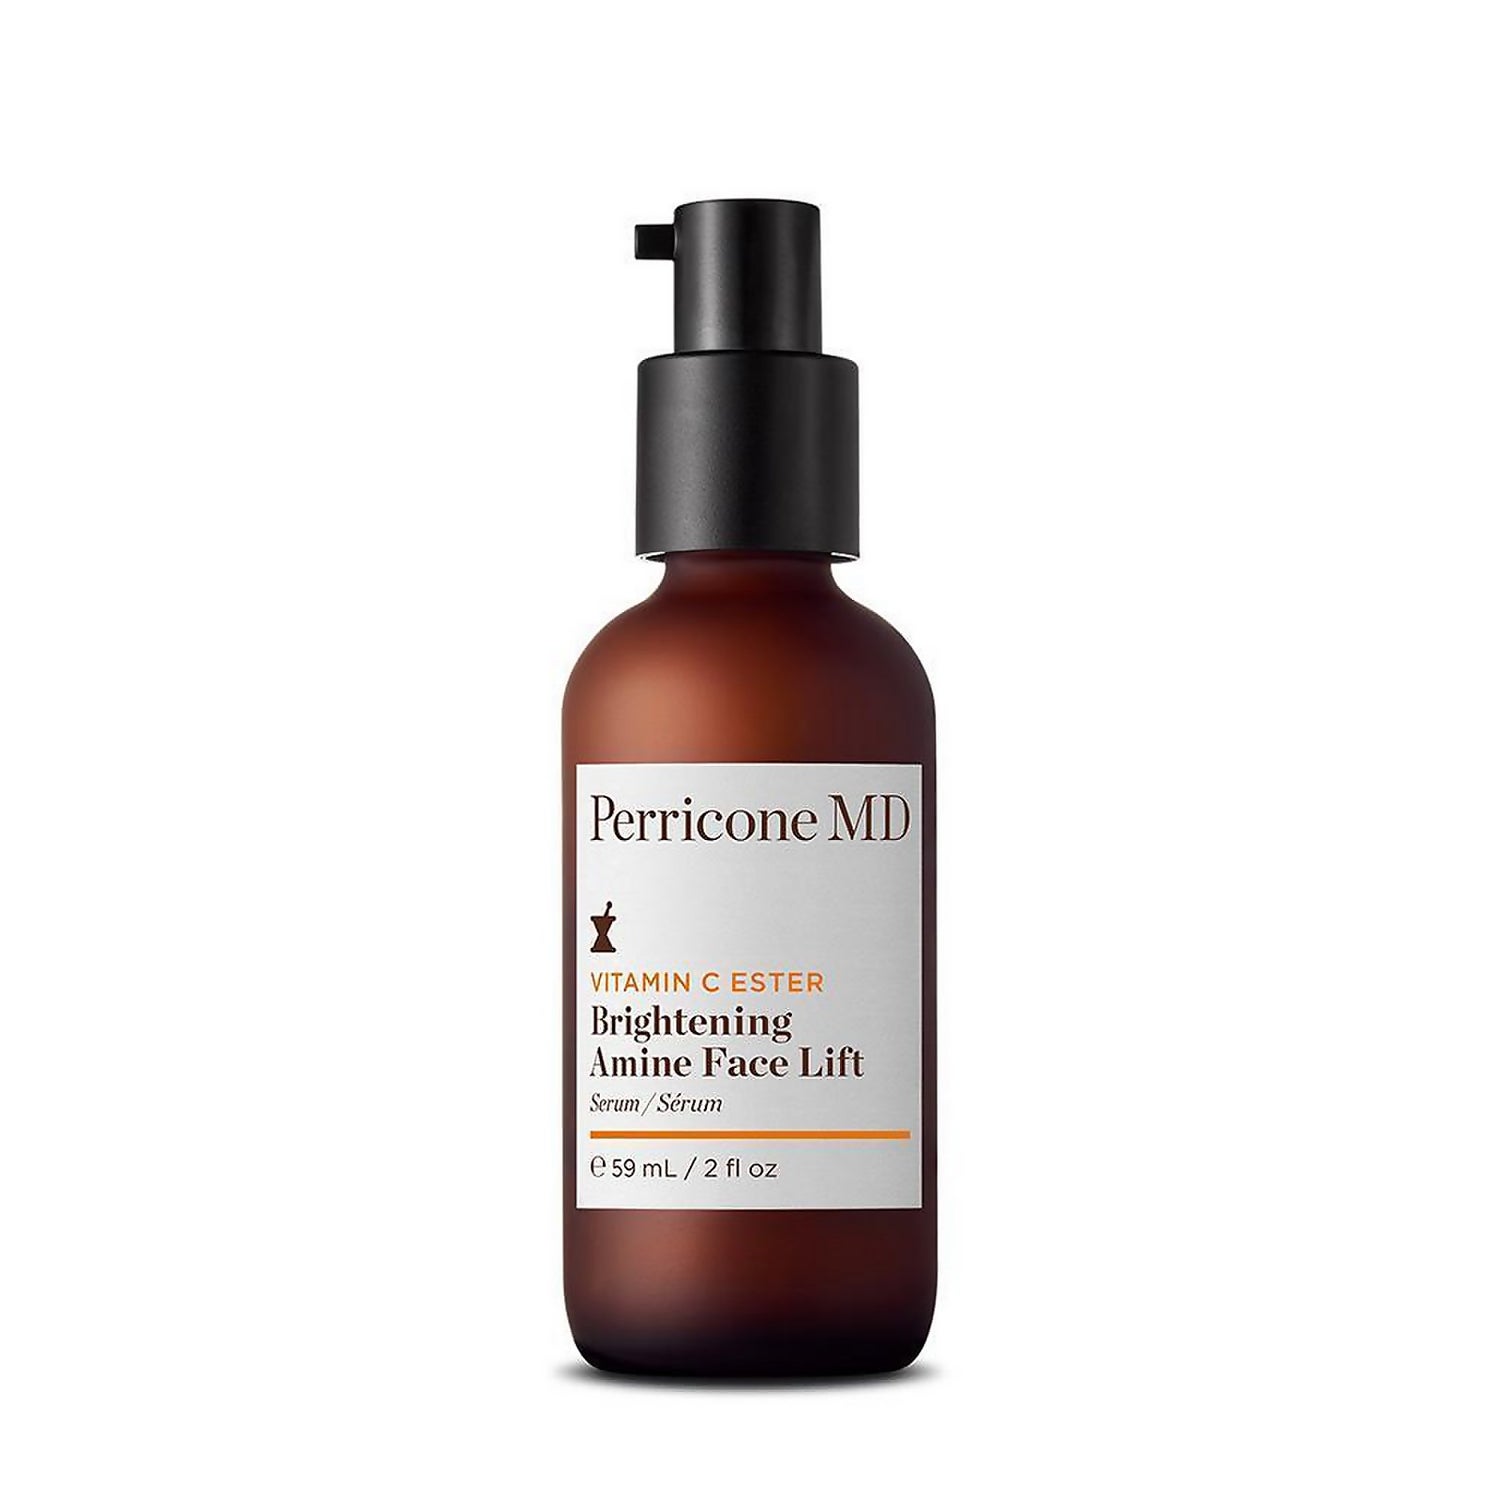 Perricone MD Vitamin C Ester Brightening Face Lift